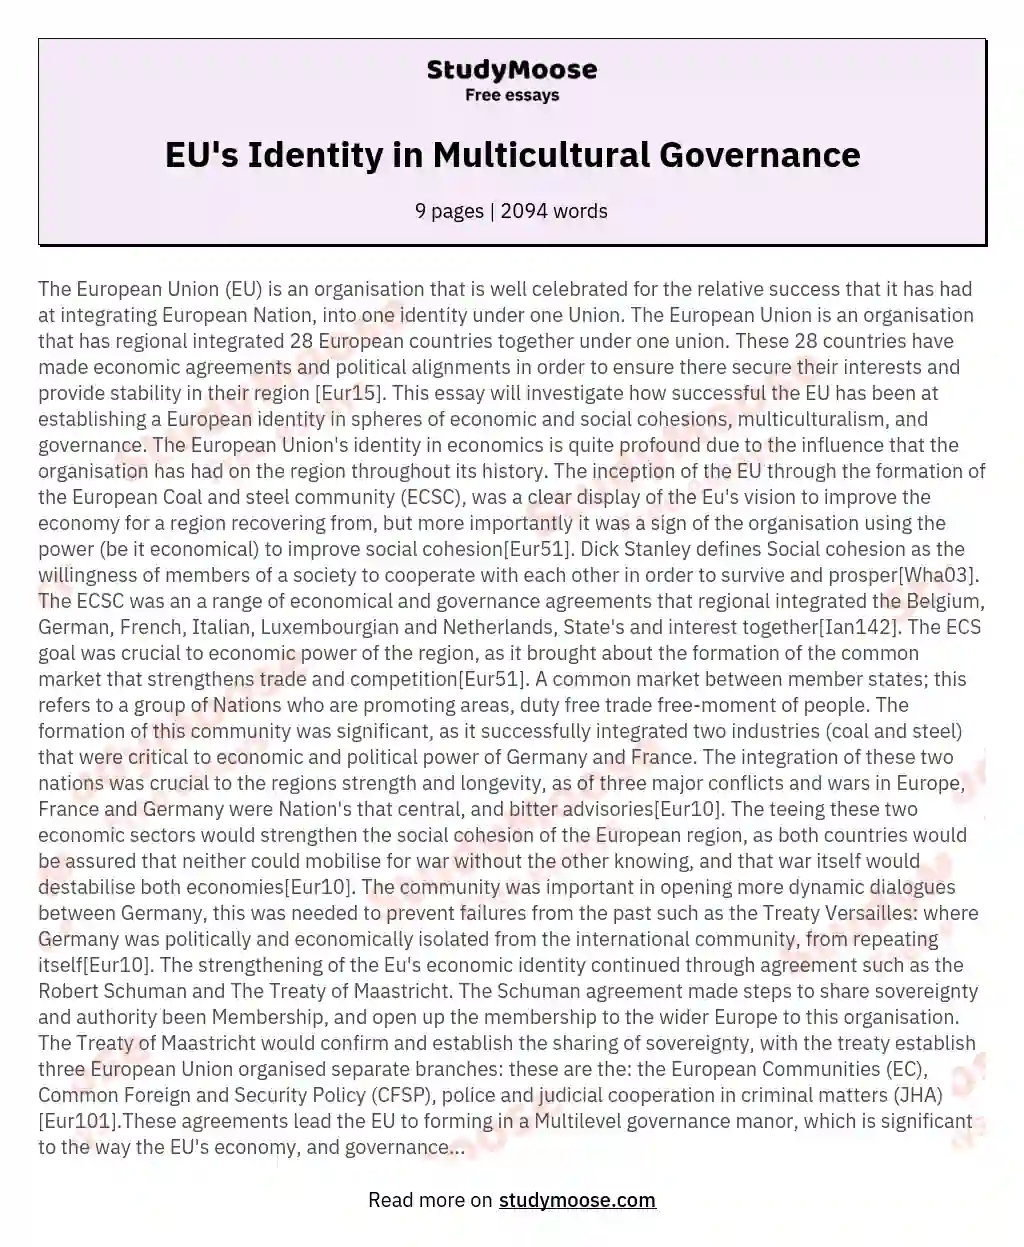 EU's Identity in Multicultural Governance essay